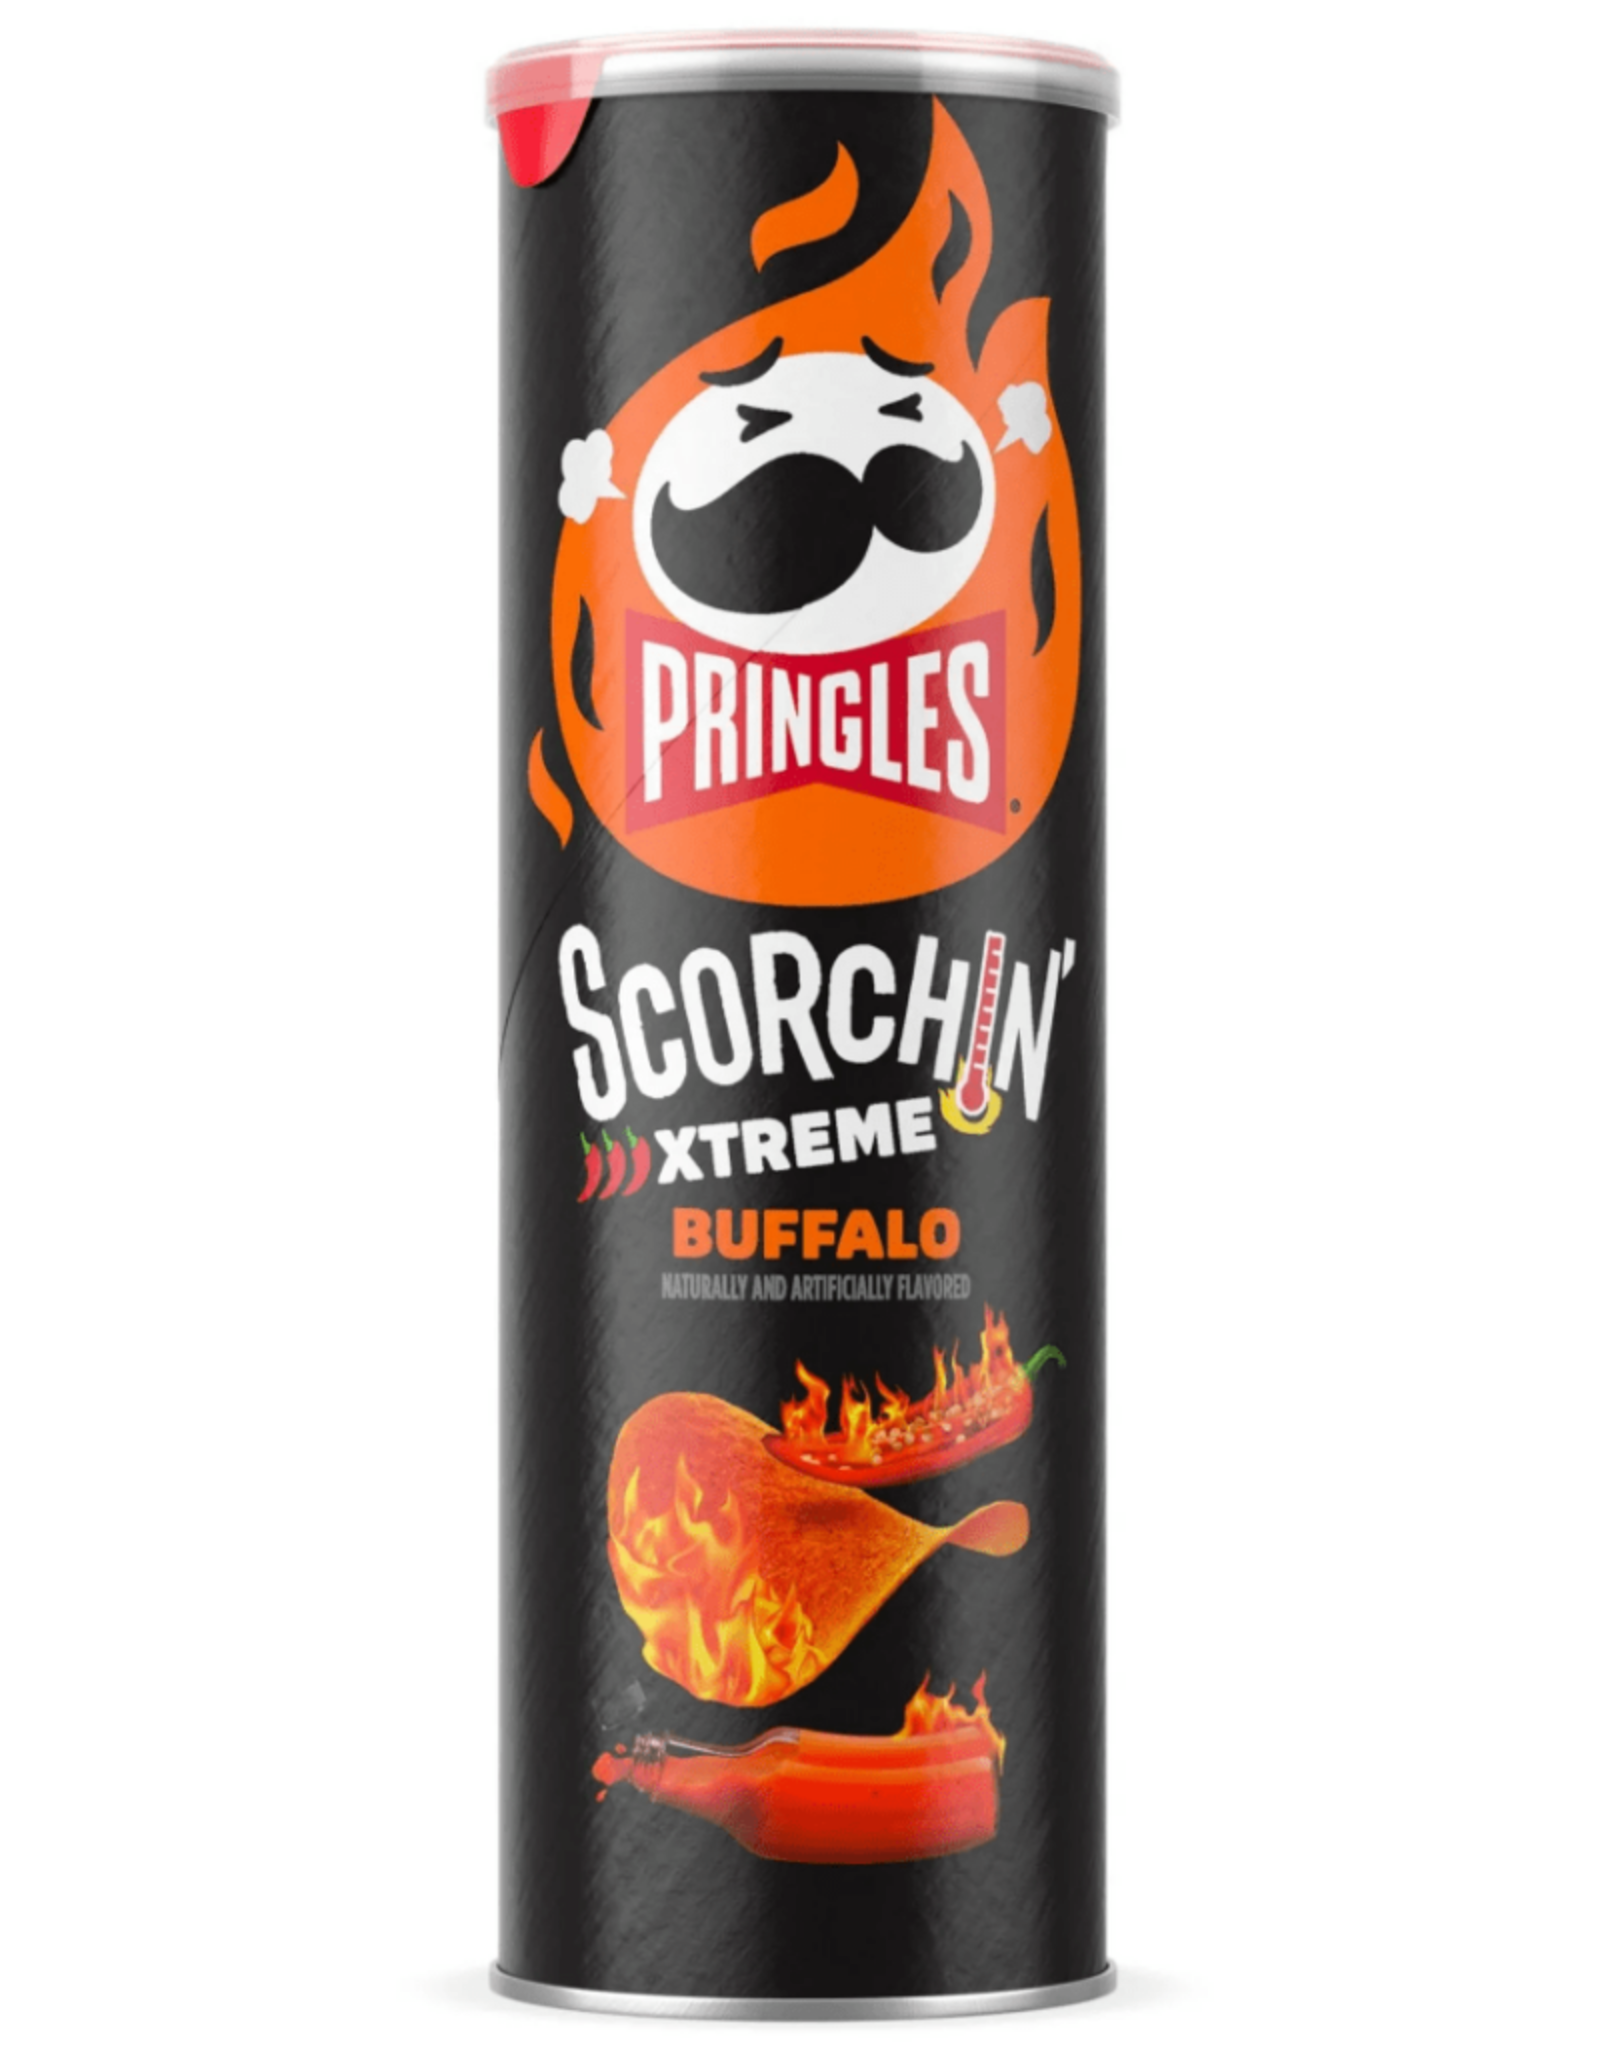 Pringles Scorchin' Xtreme Buffalo